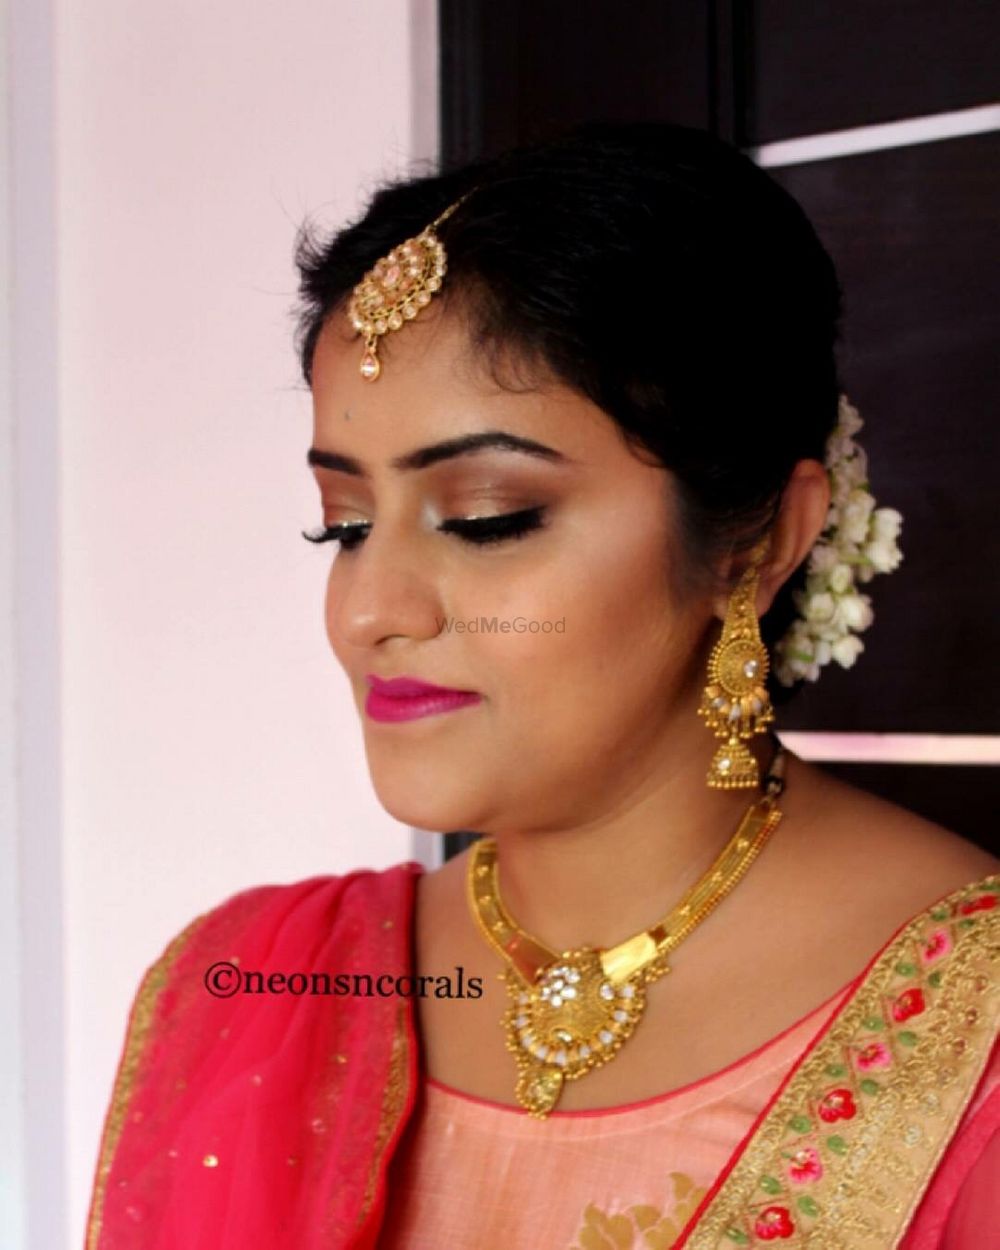 Photo By NeonsNcorals by Makeup Artist Shruti - Bridal Makeup